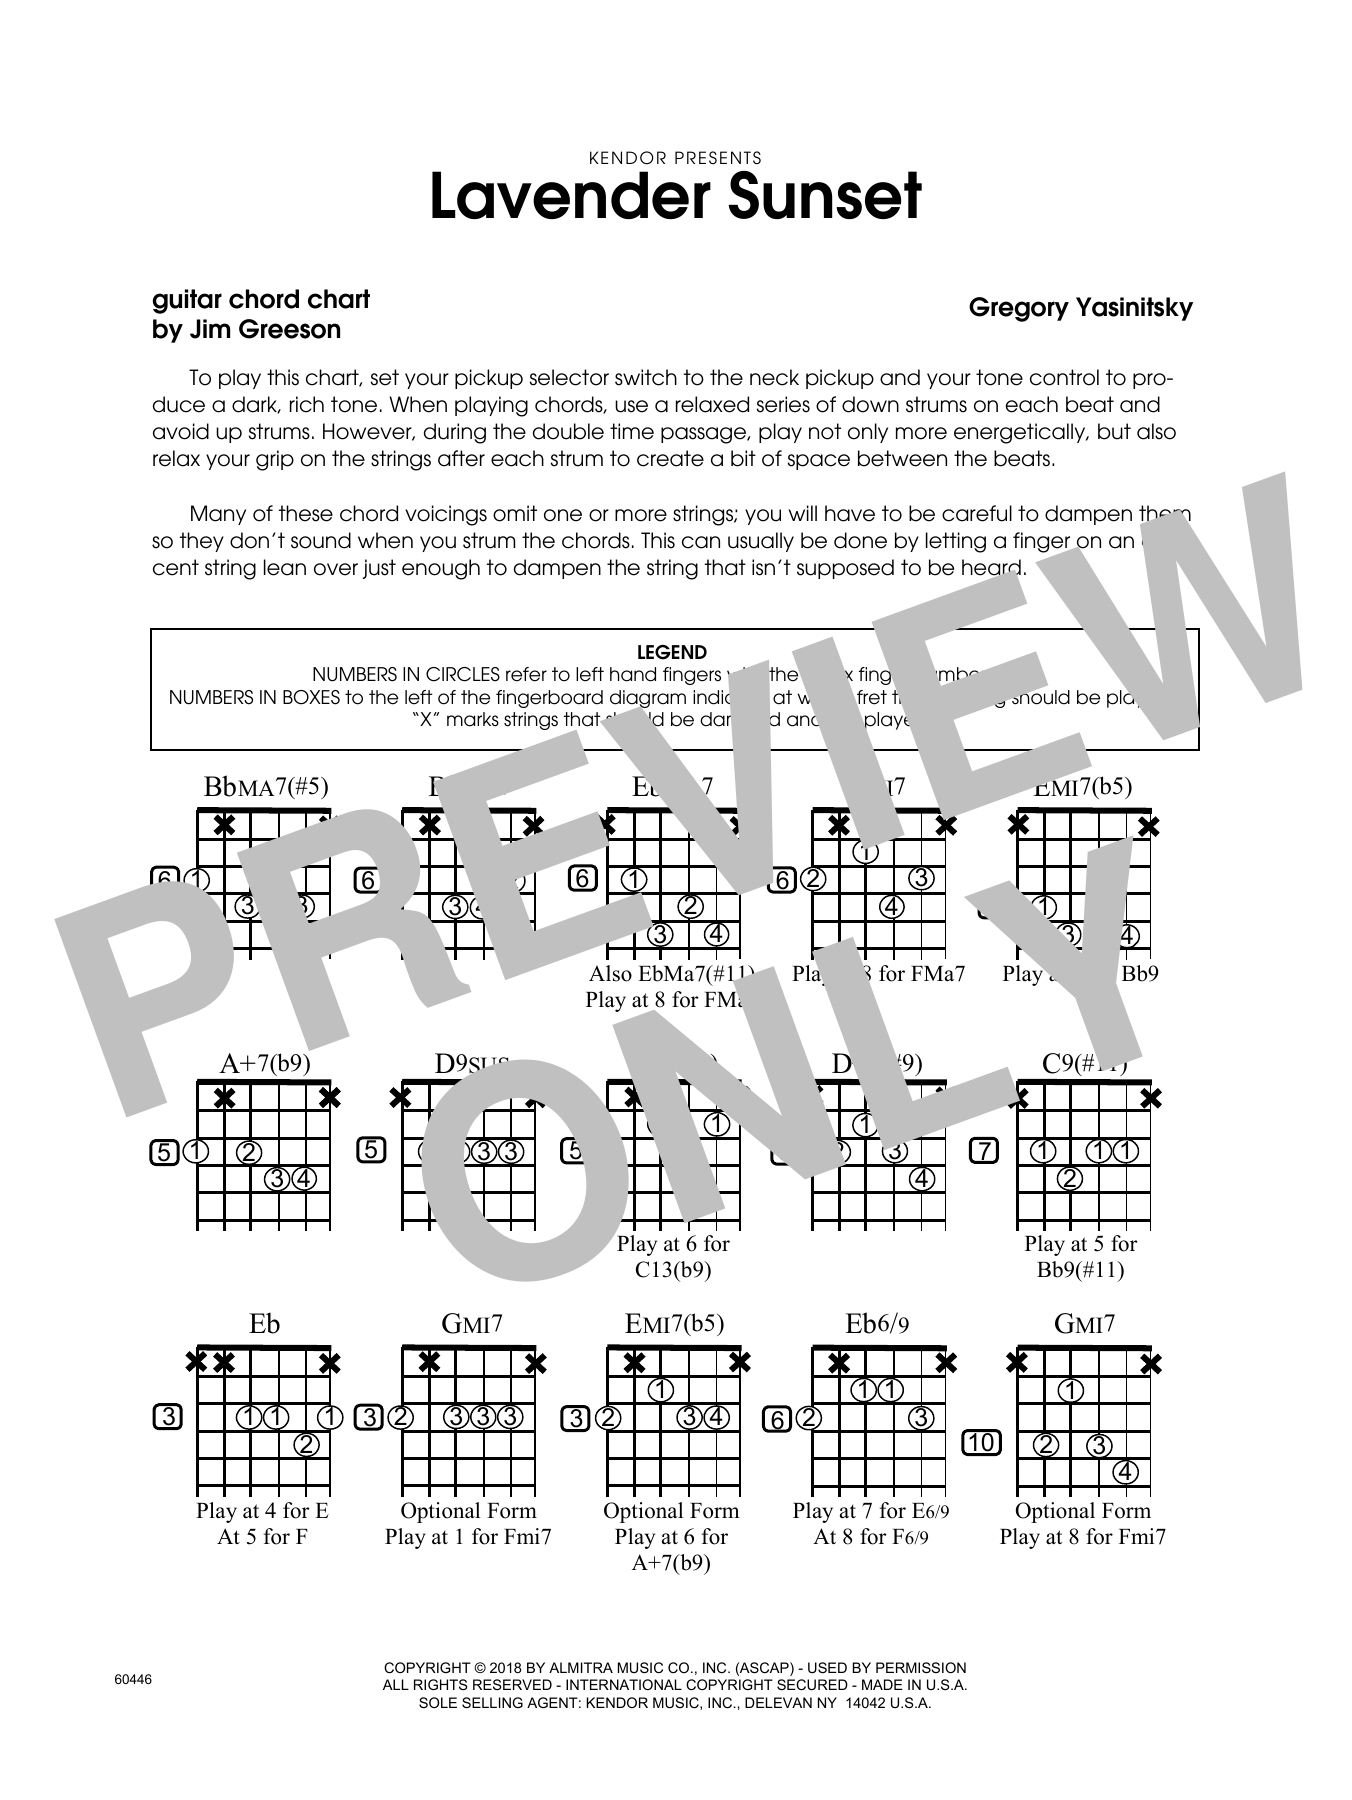 Download Gregory Yasinitsky Lavender Sunset - Guitar Chord Chart Sheet Music